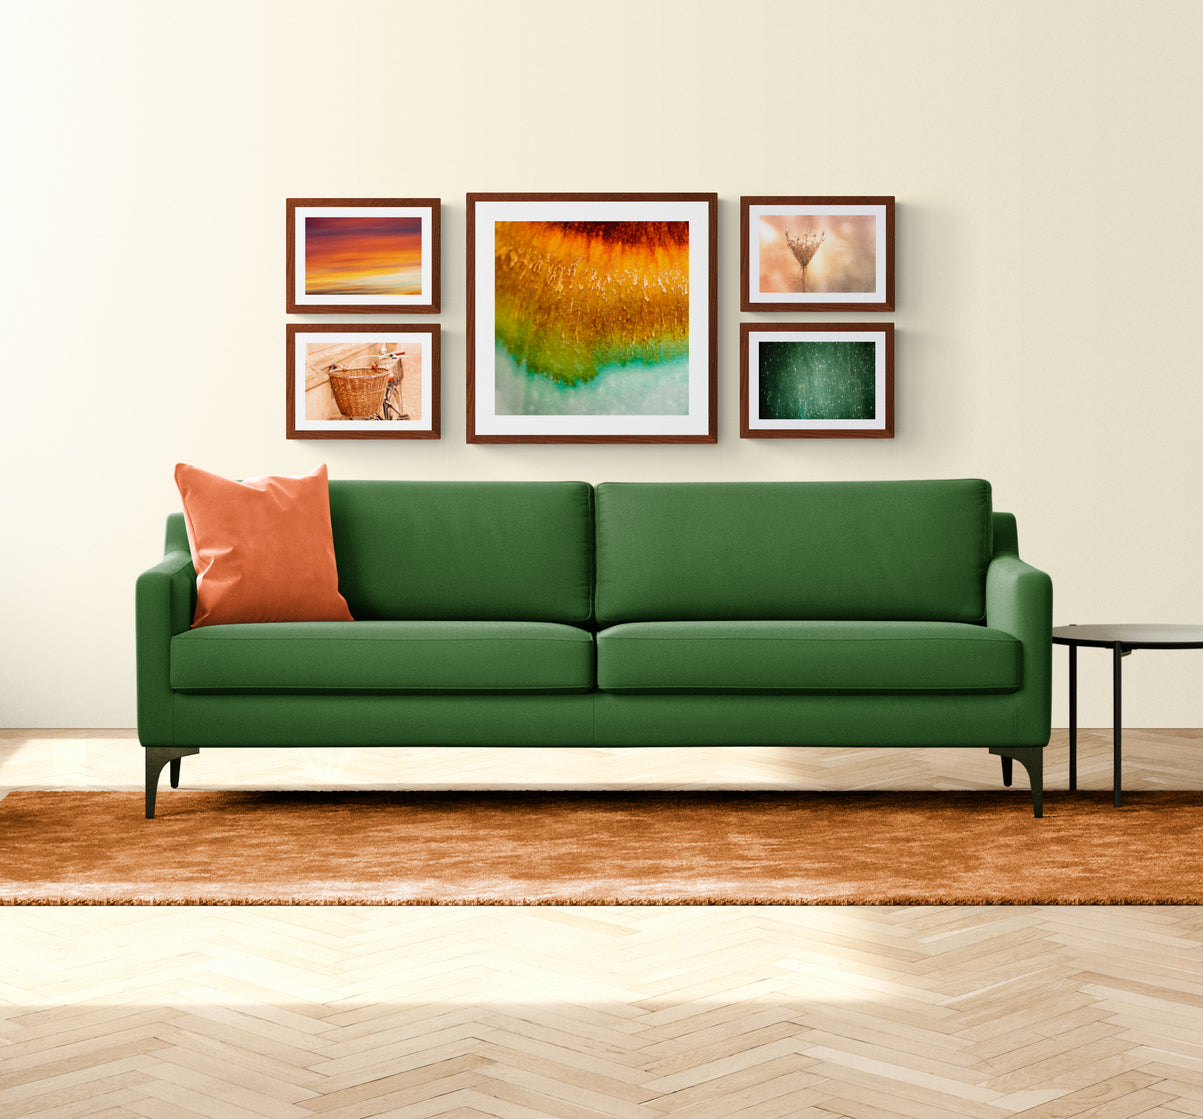 Fanciful Imagination bundle - Christi Kraft - fine art photography for home decor